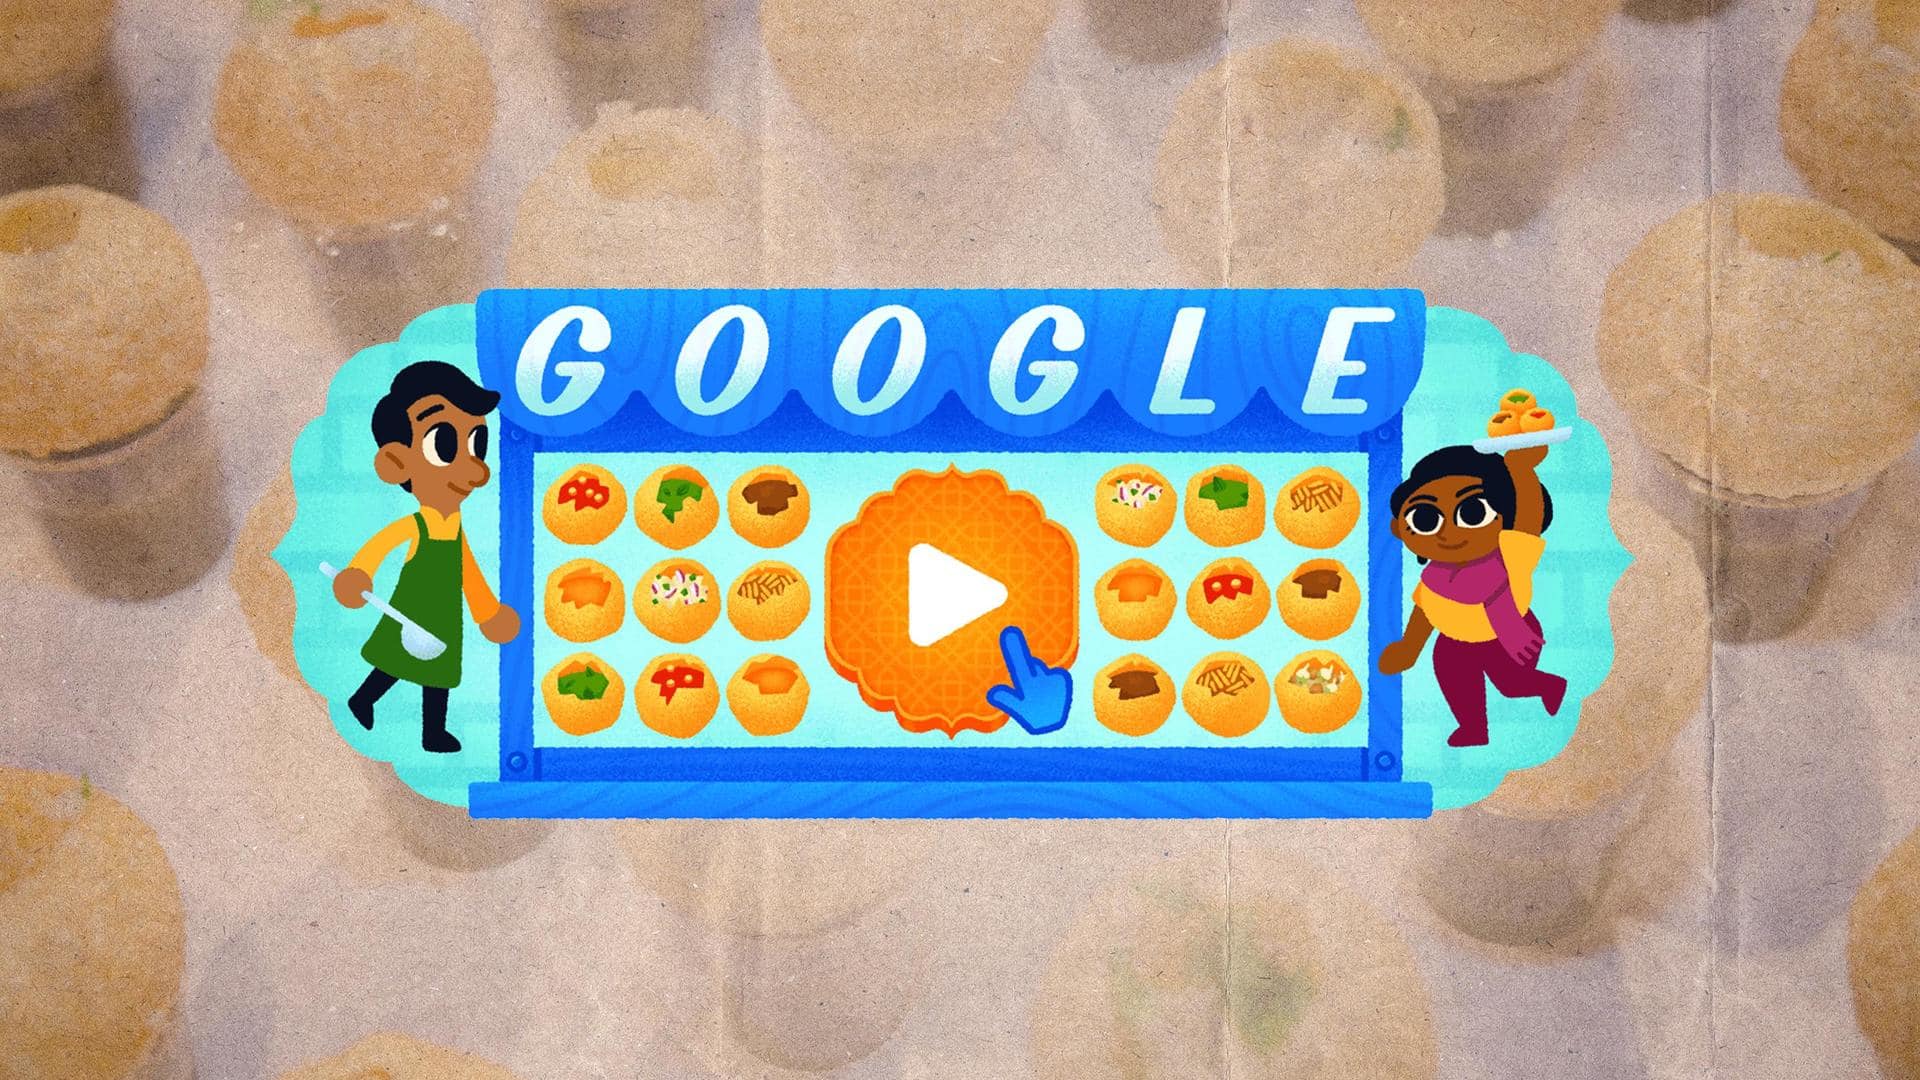 More 'Pani Puri' : Google Doodle celebrates the popular Indian